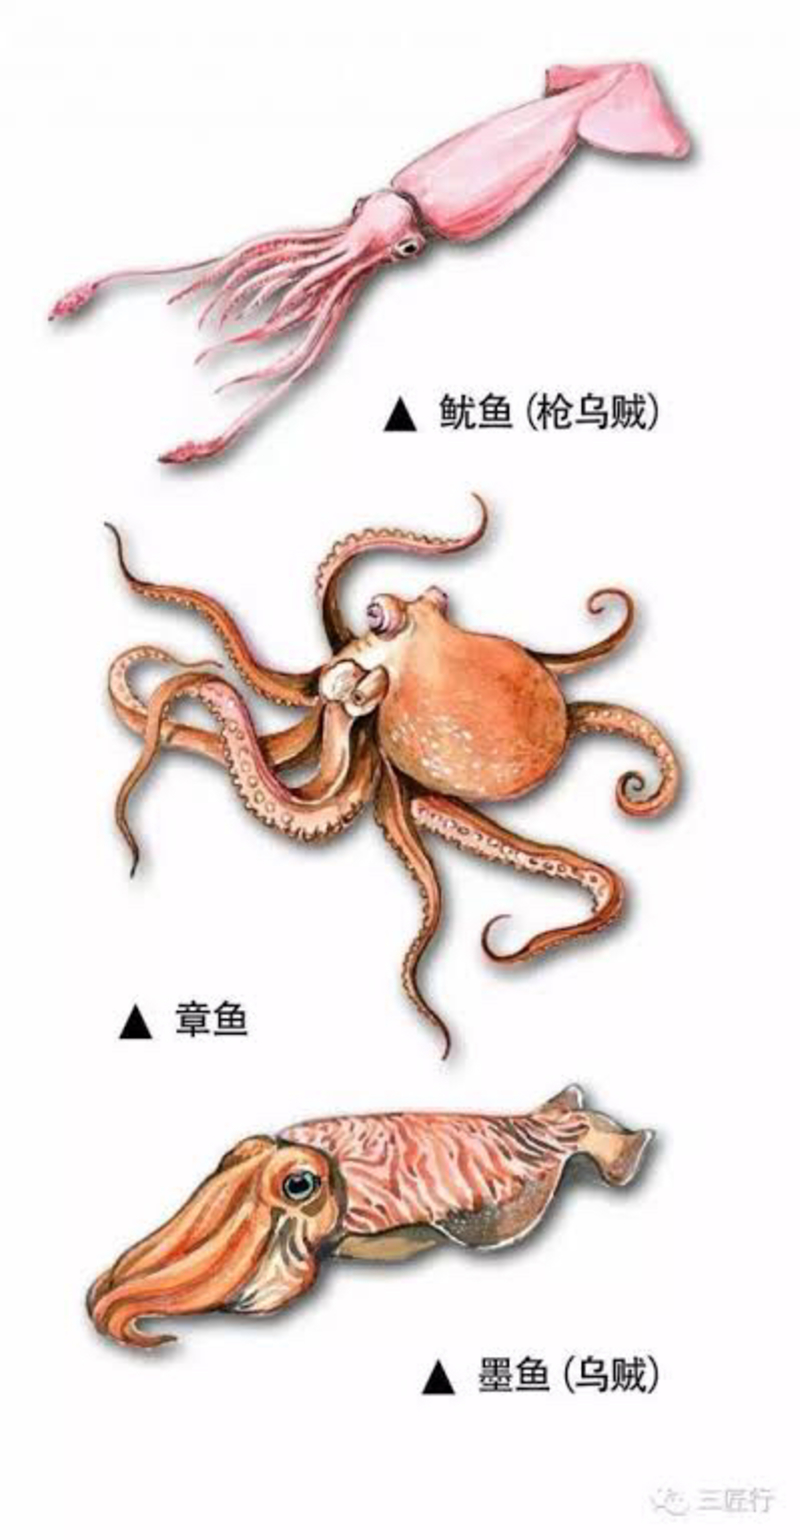 octopus and squid